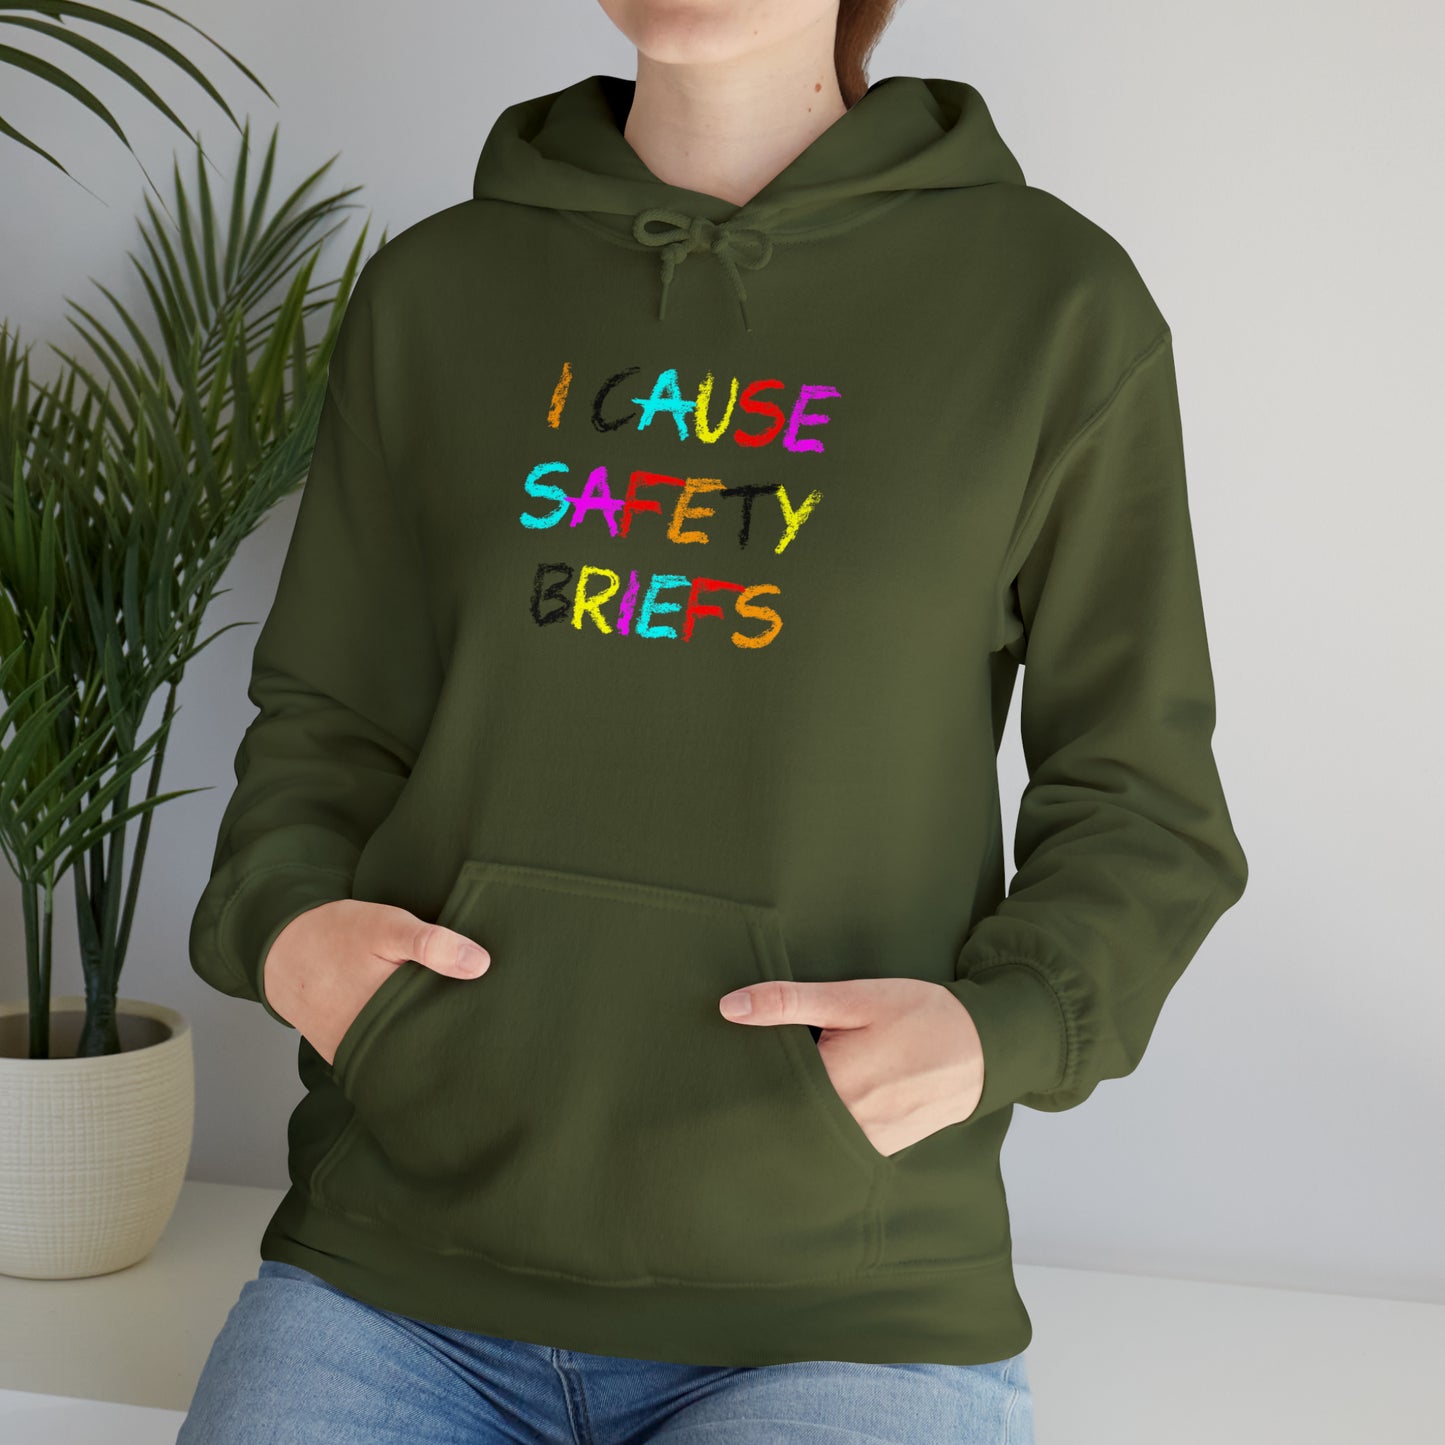 I cause safety briefs - Hooded Sweatshirt